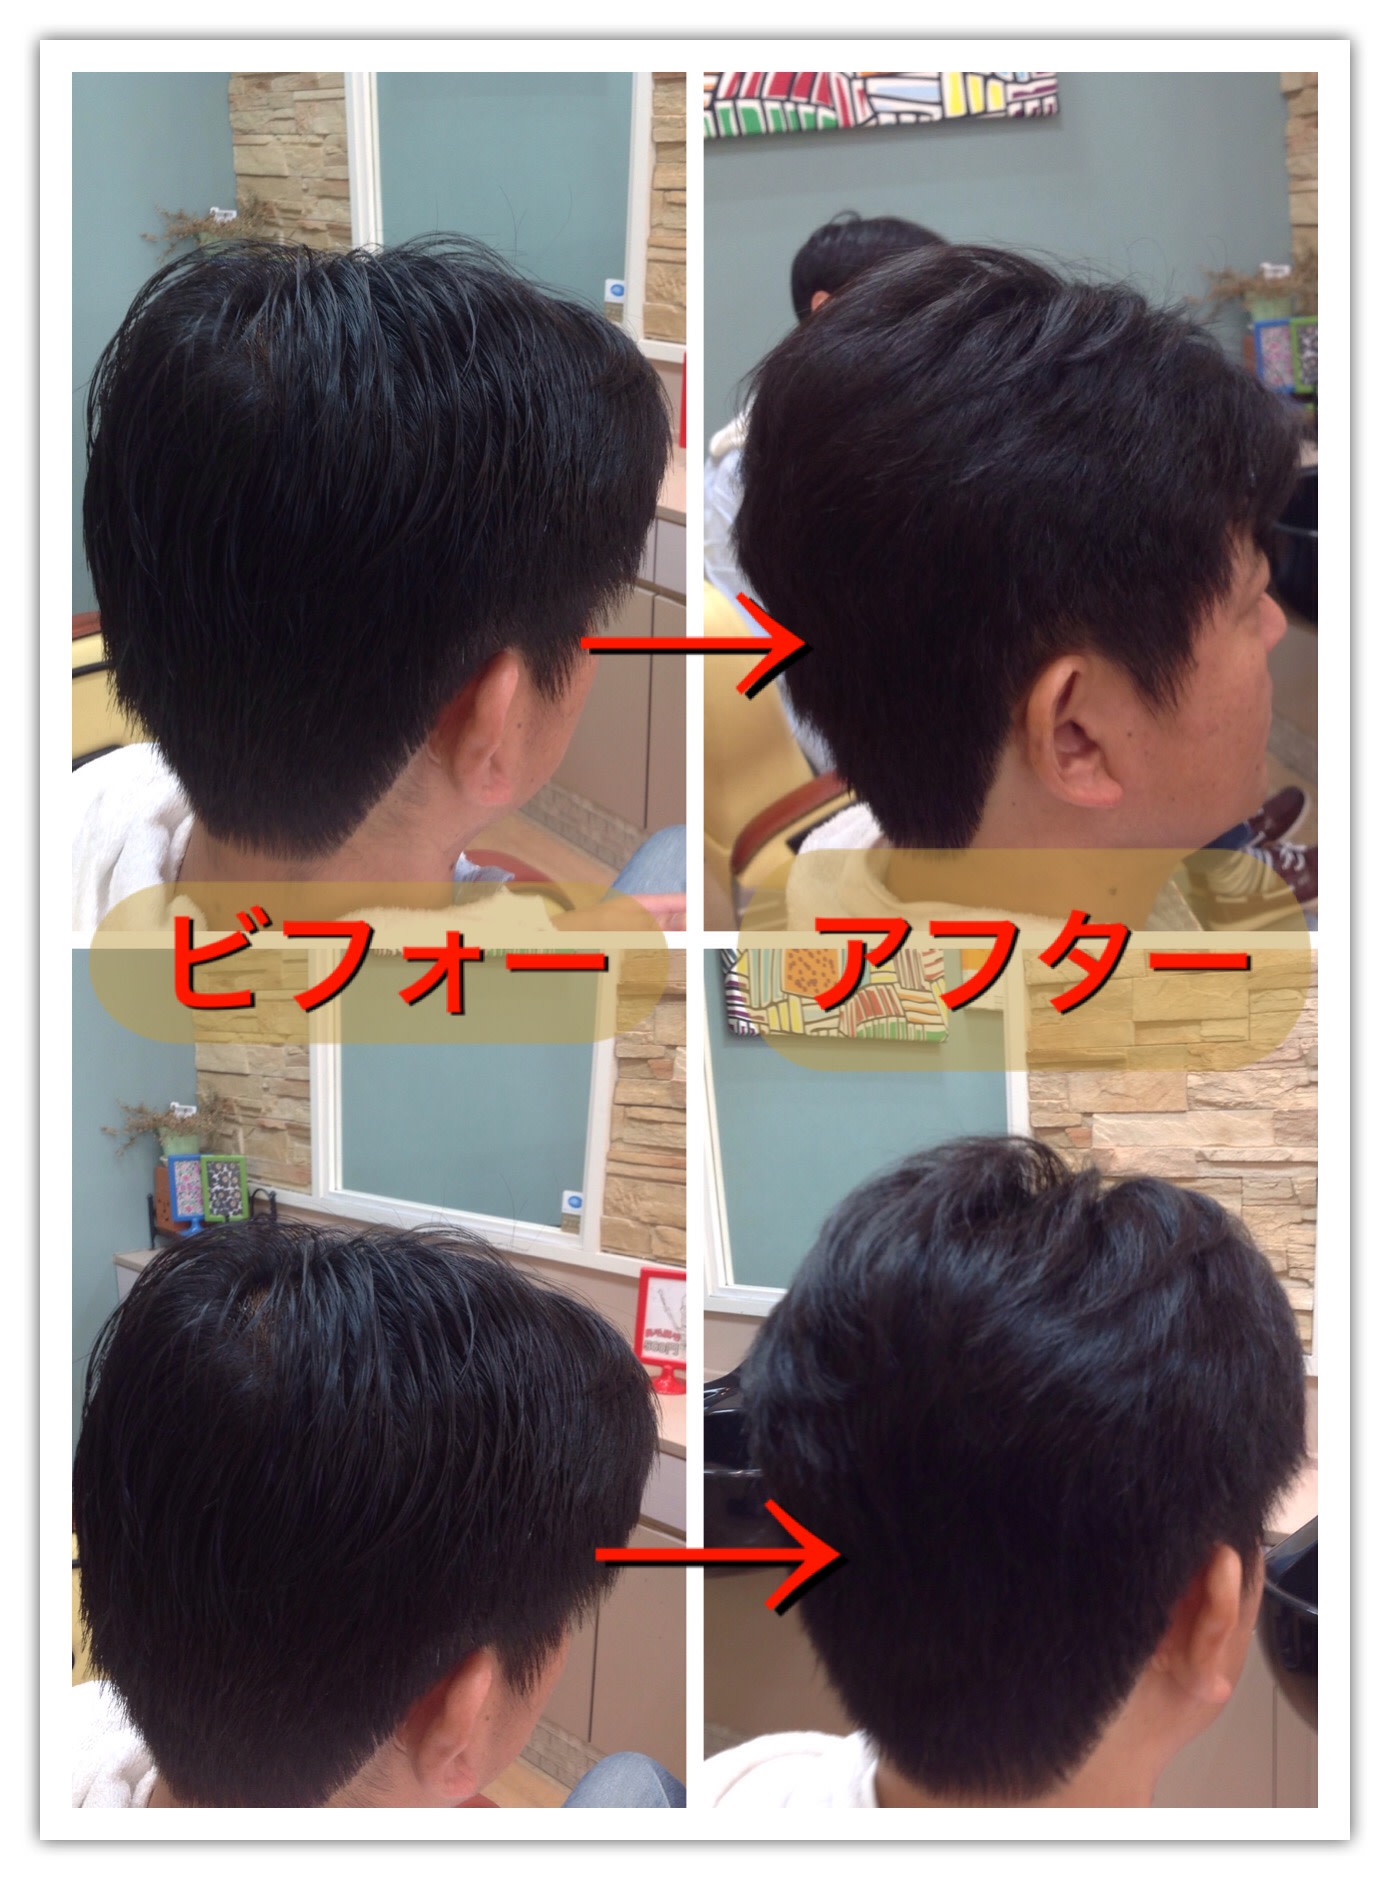 takeuchi barber【タケウチ】のスタイル紹介。ヘアアイロンで簡単スタイリング